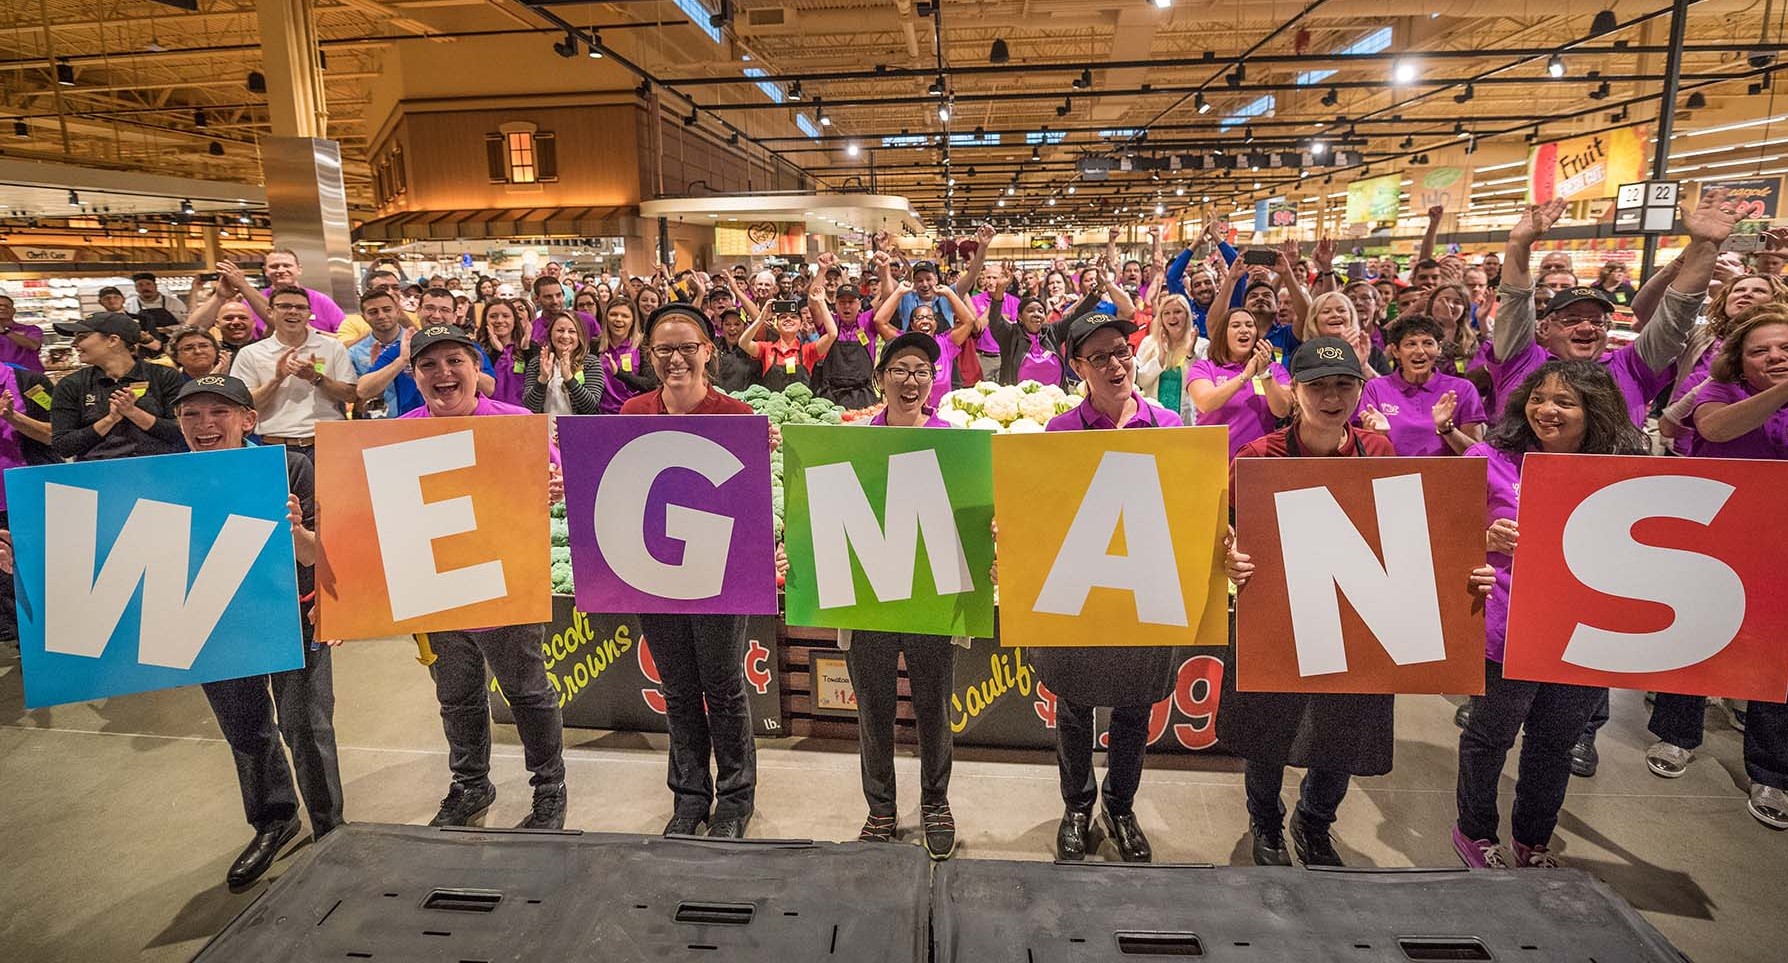 Wegmans employees lined up holding sign that says Wegmans